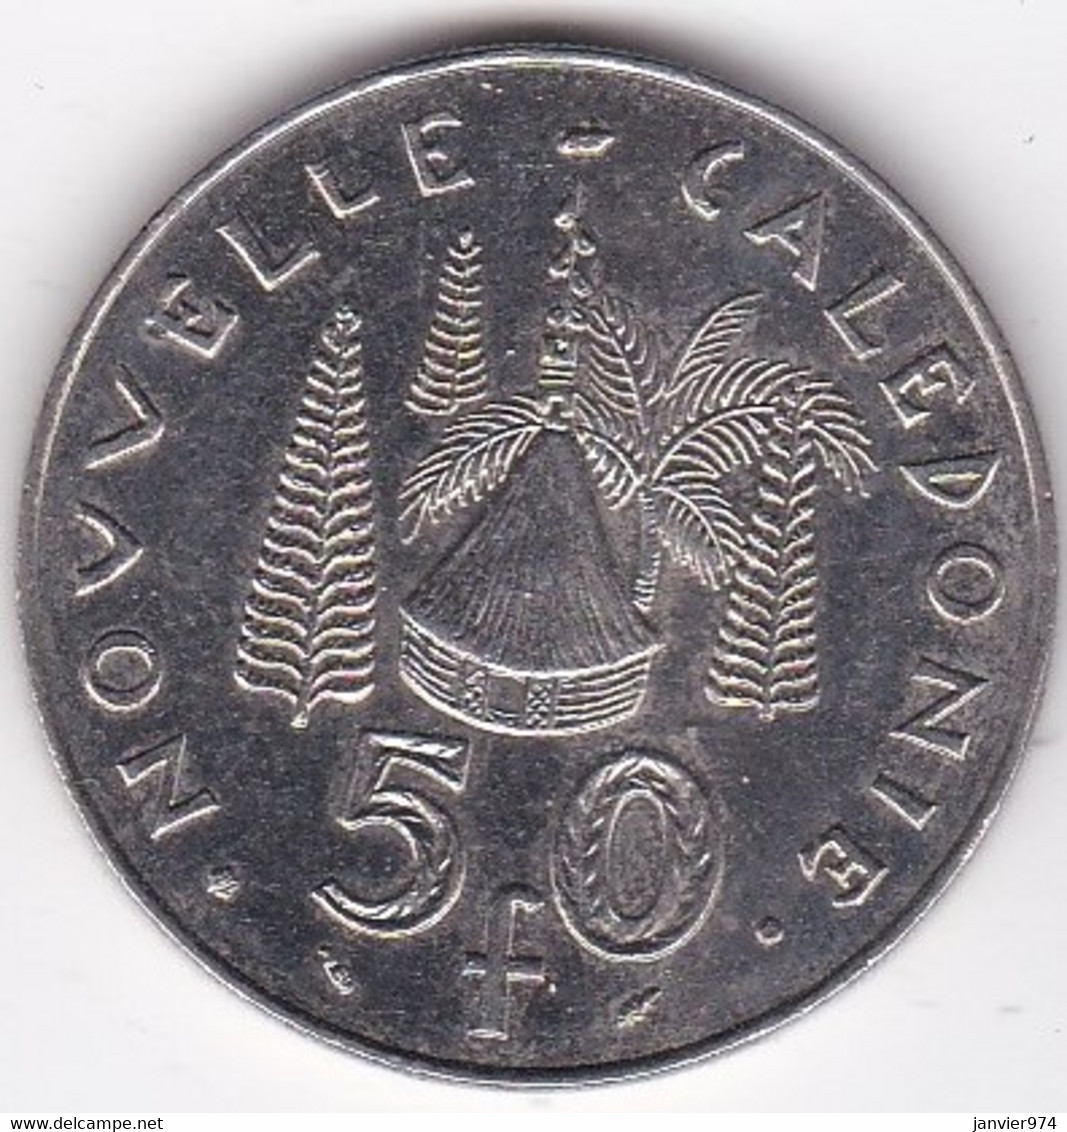 Nouvelle-Calédonie . 50 Francs 1991. En Nickel - New Caledonia